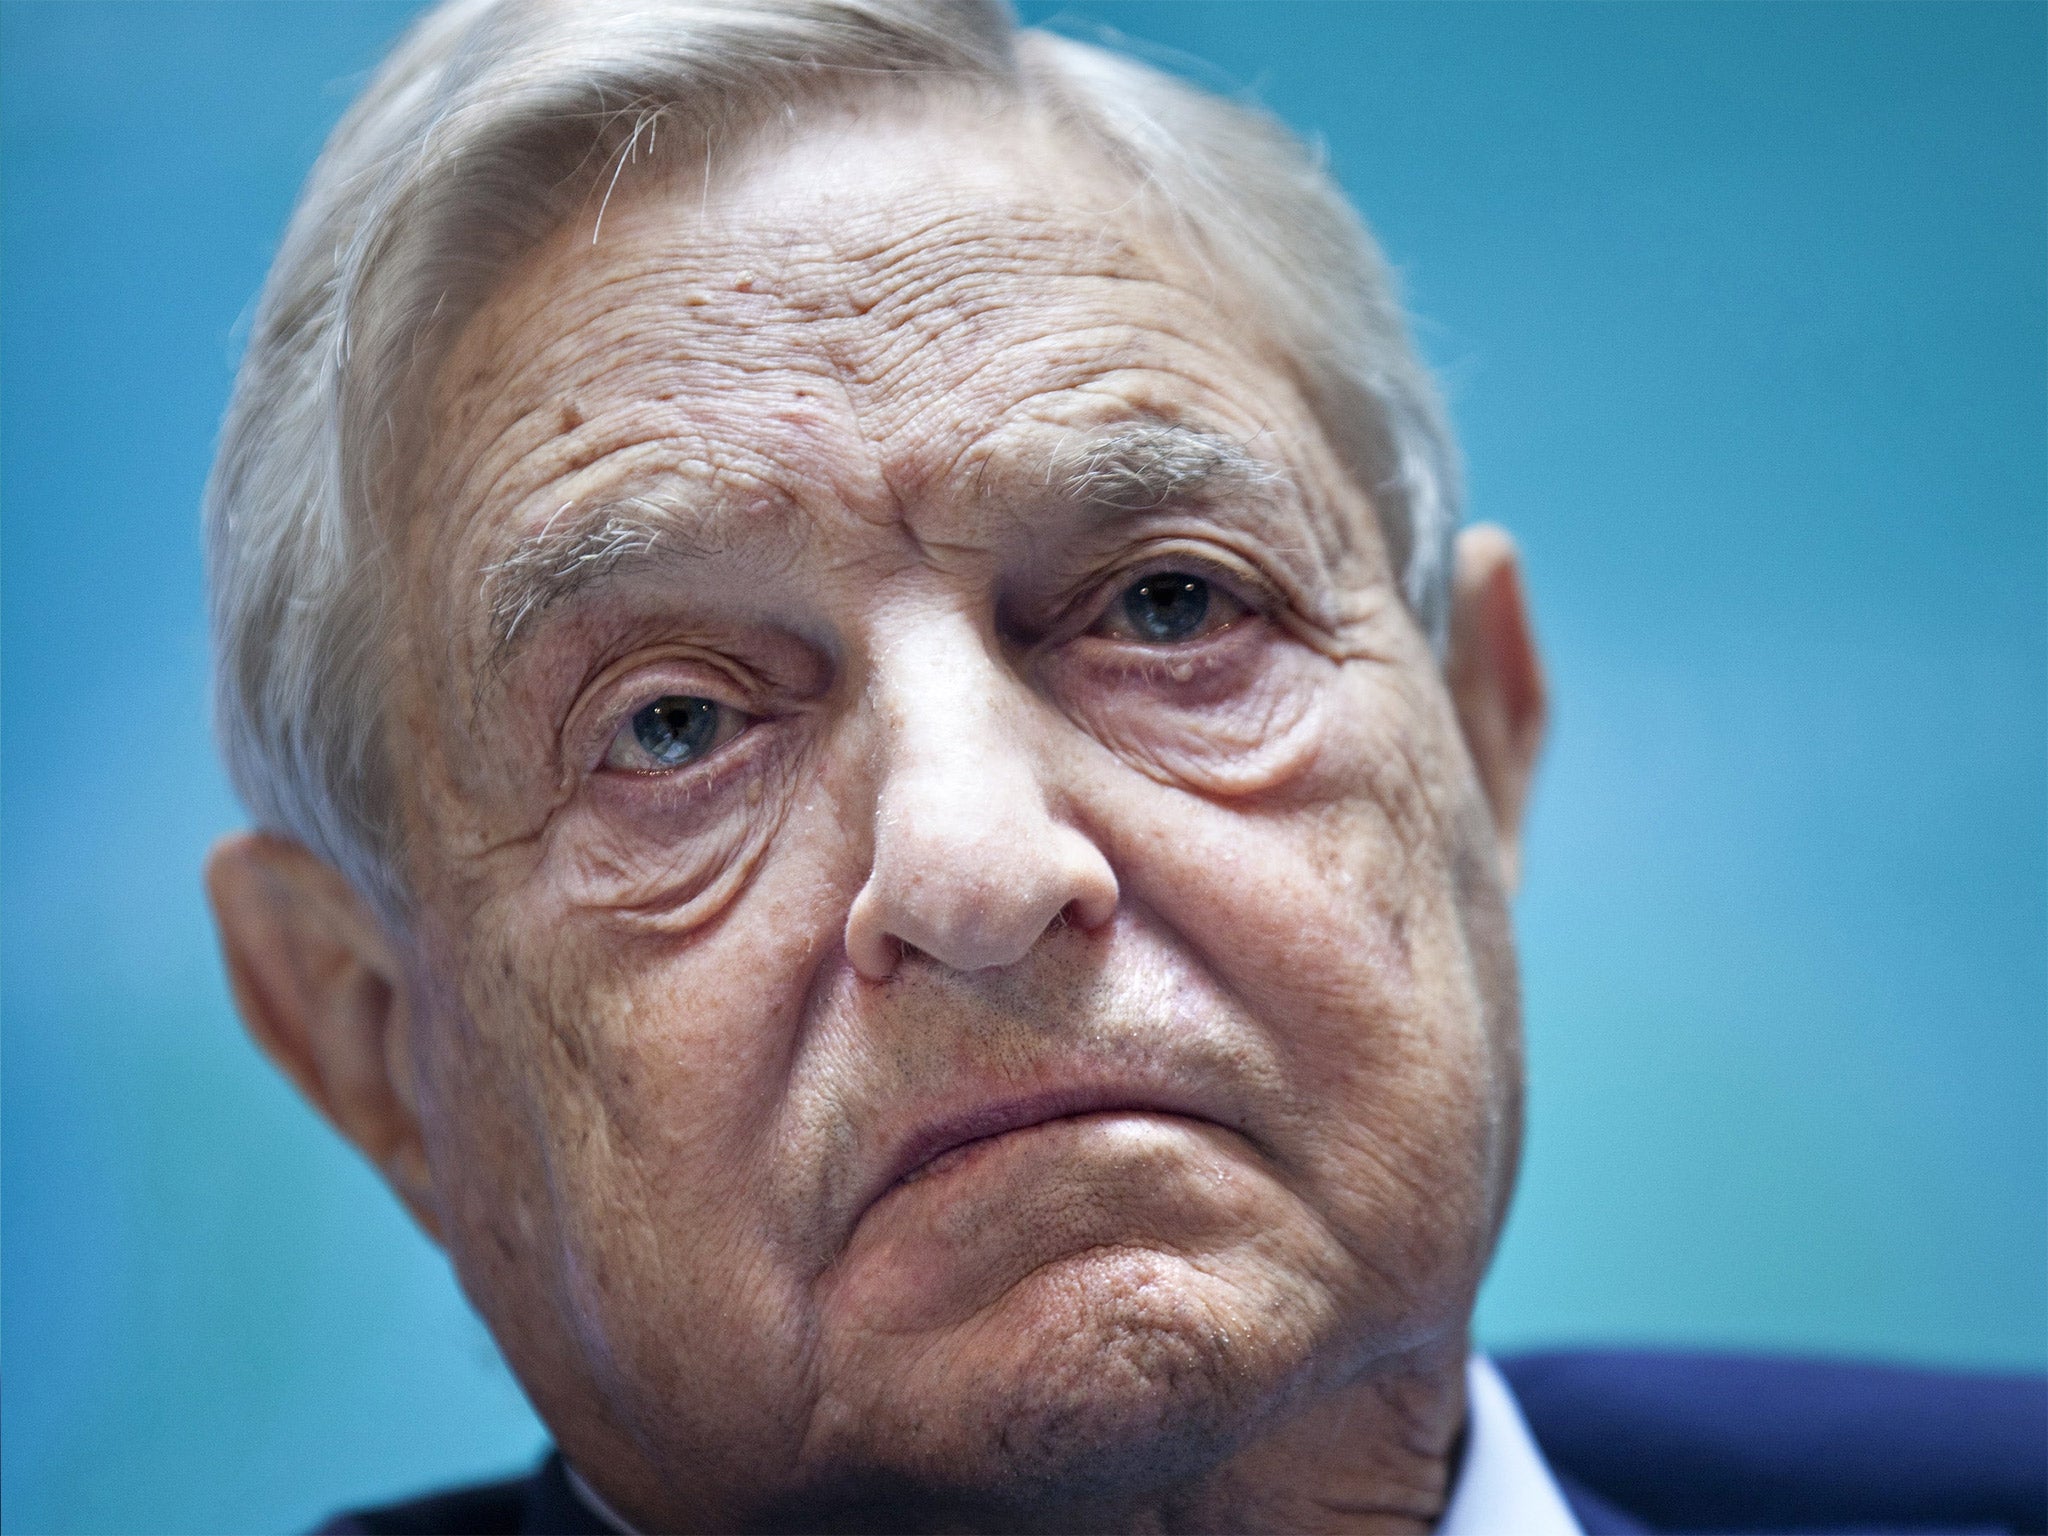 George Soros the Hungarian-born American financier has become a model of progressive liberal giving